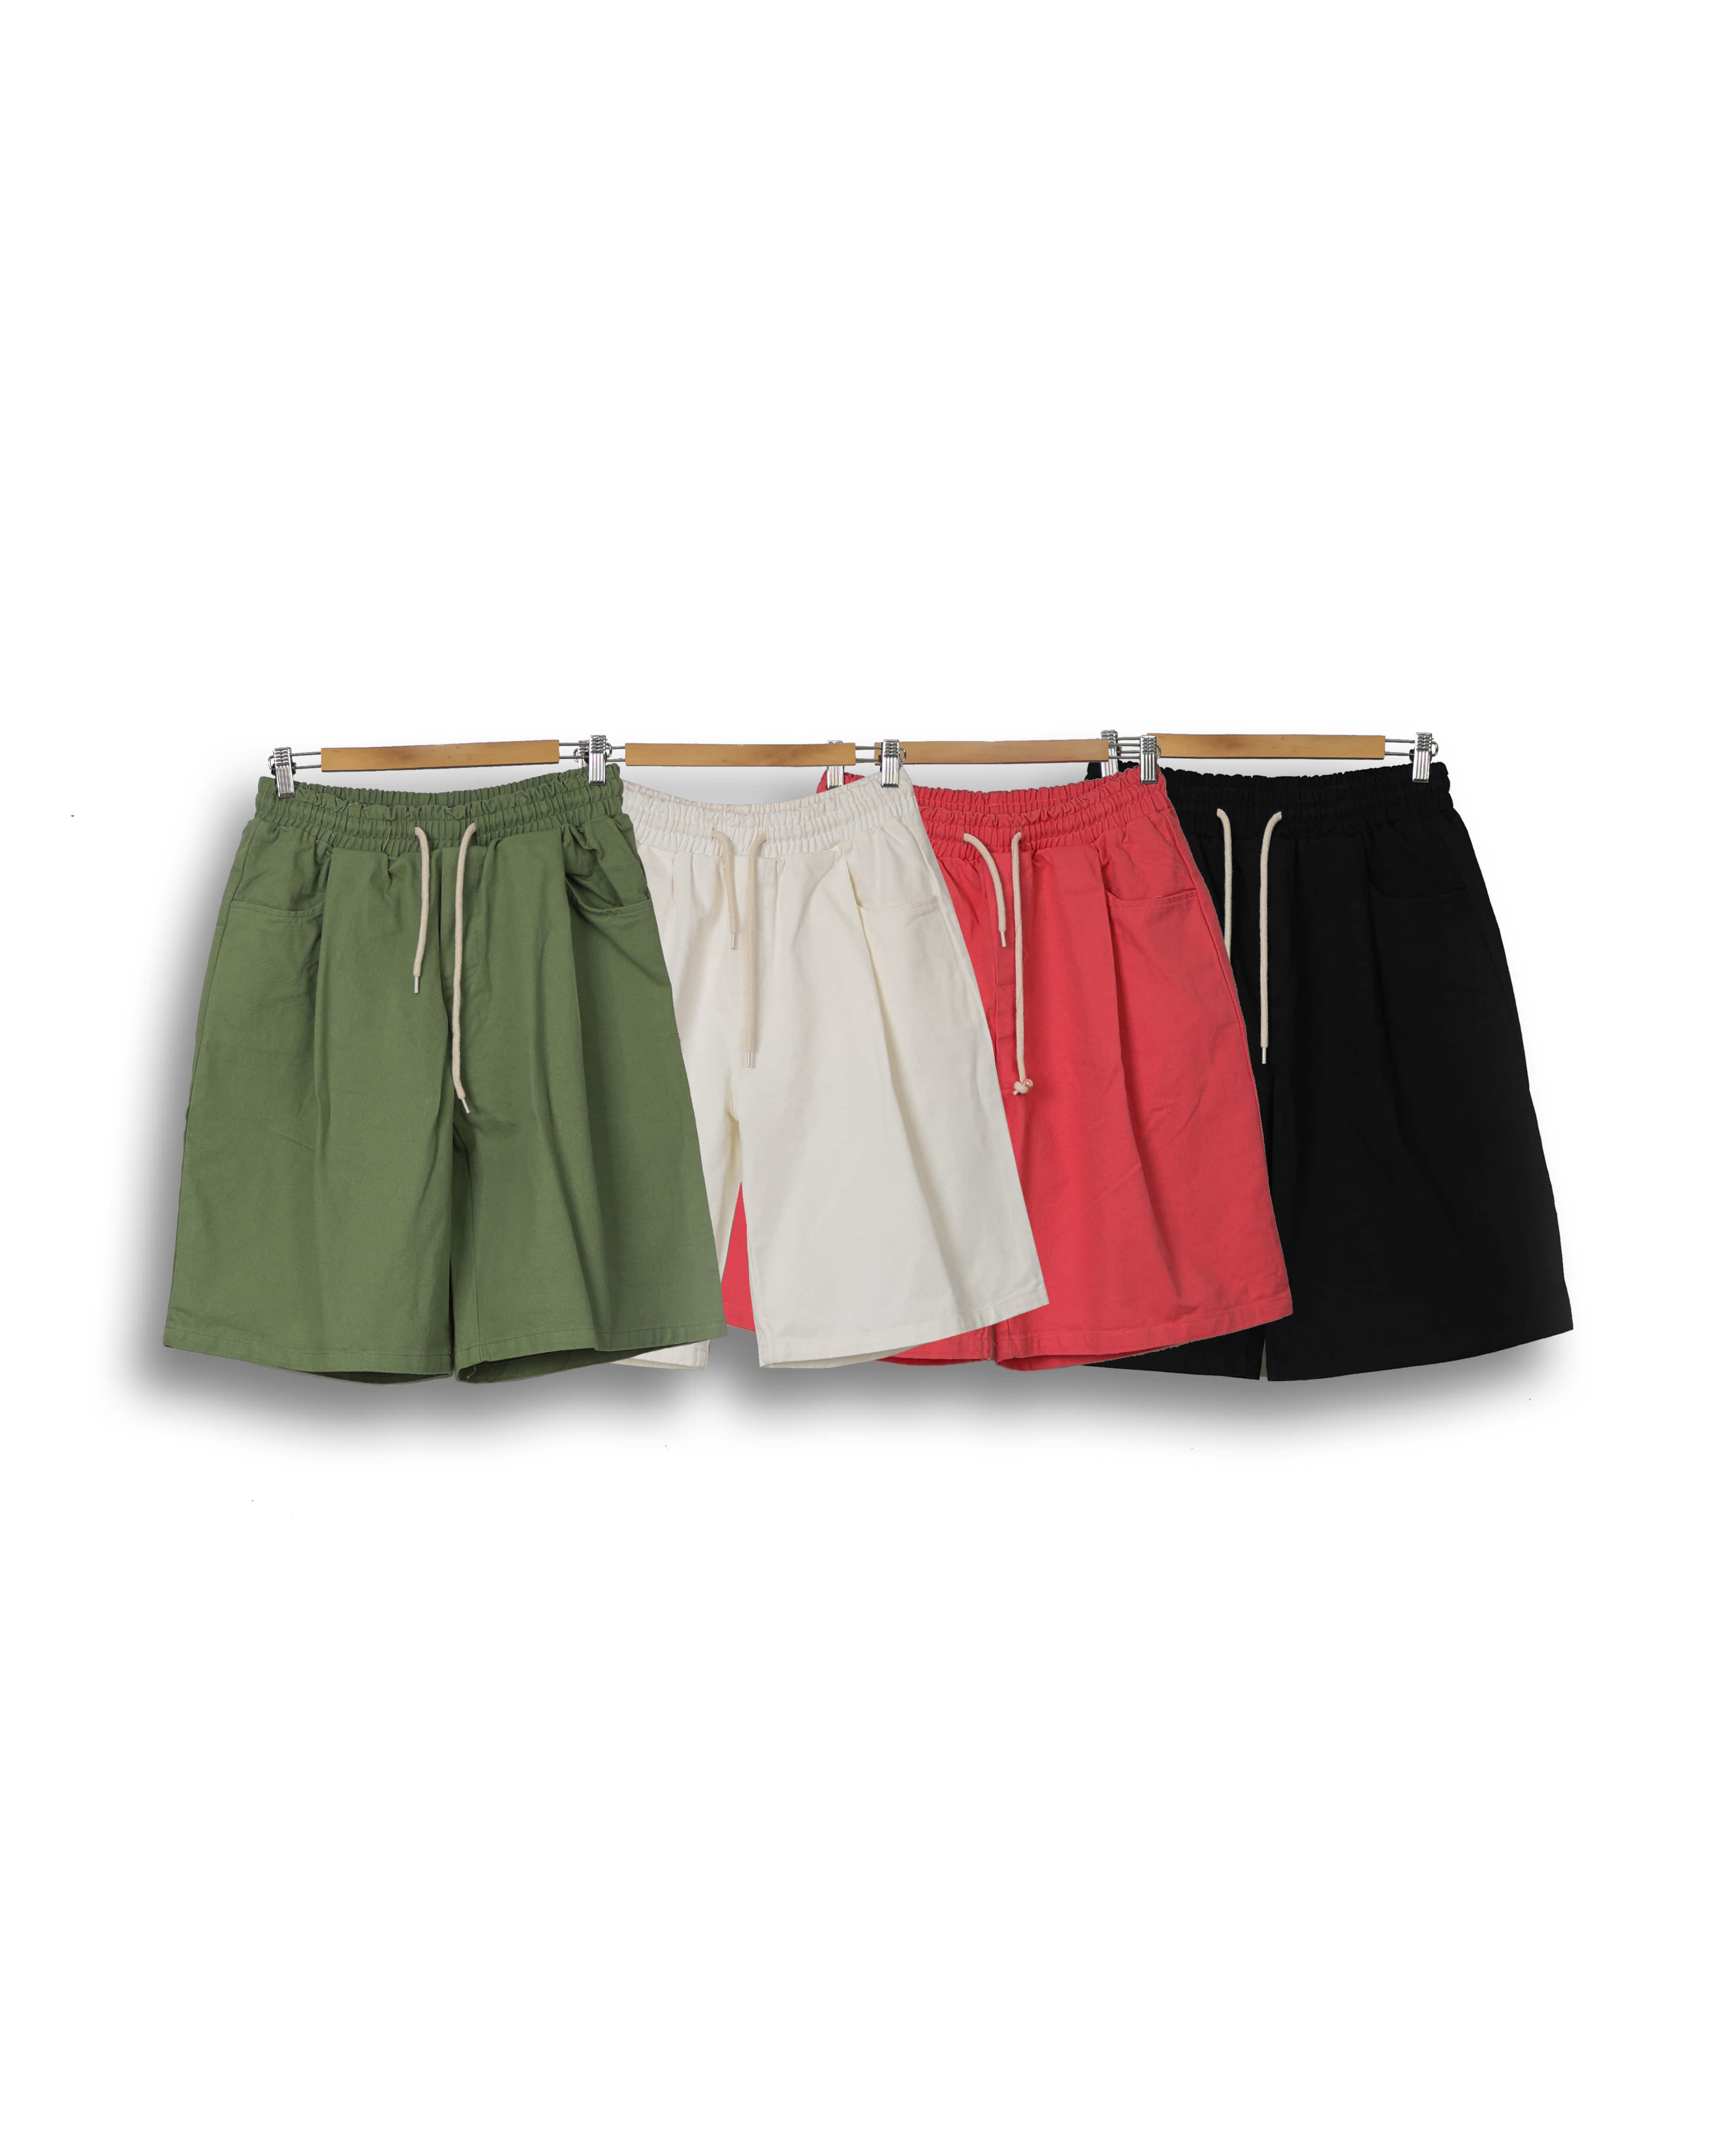 RARA Personal Tuck Bermuda Pants (Black/Khaki/Pink/Ivory)